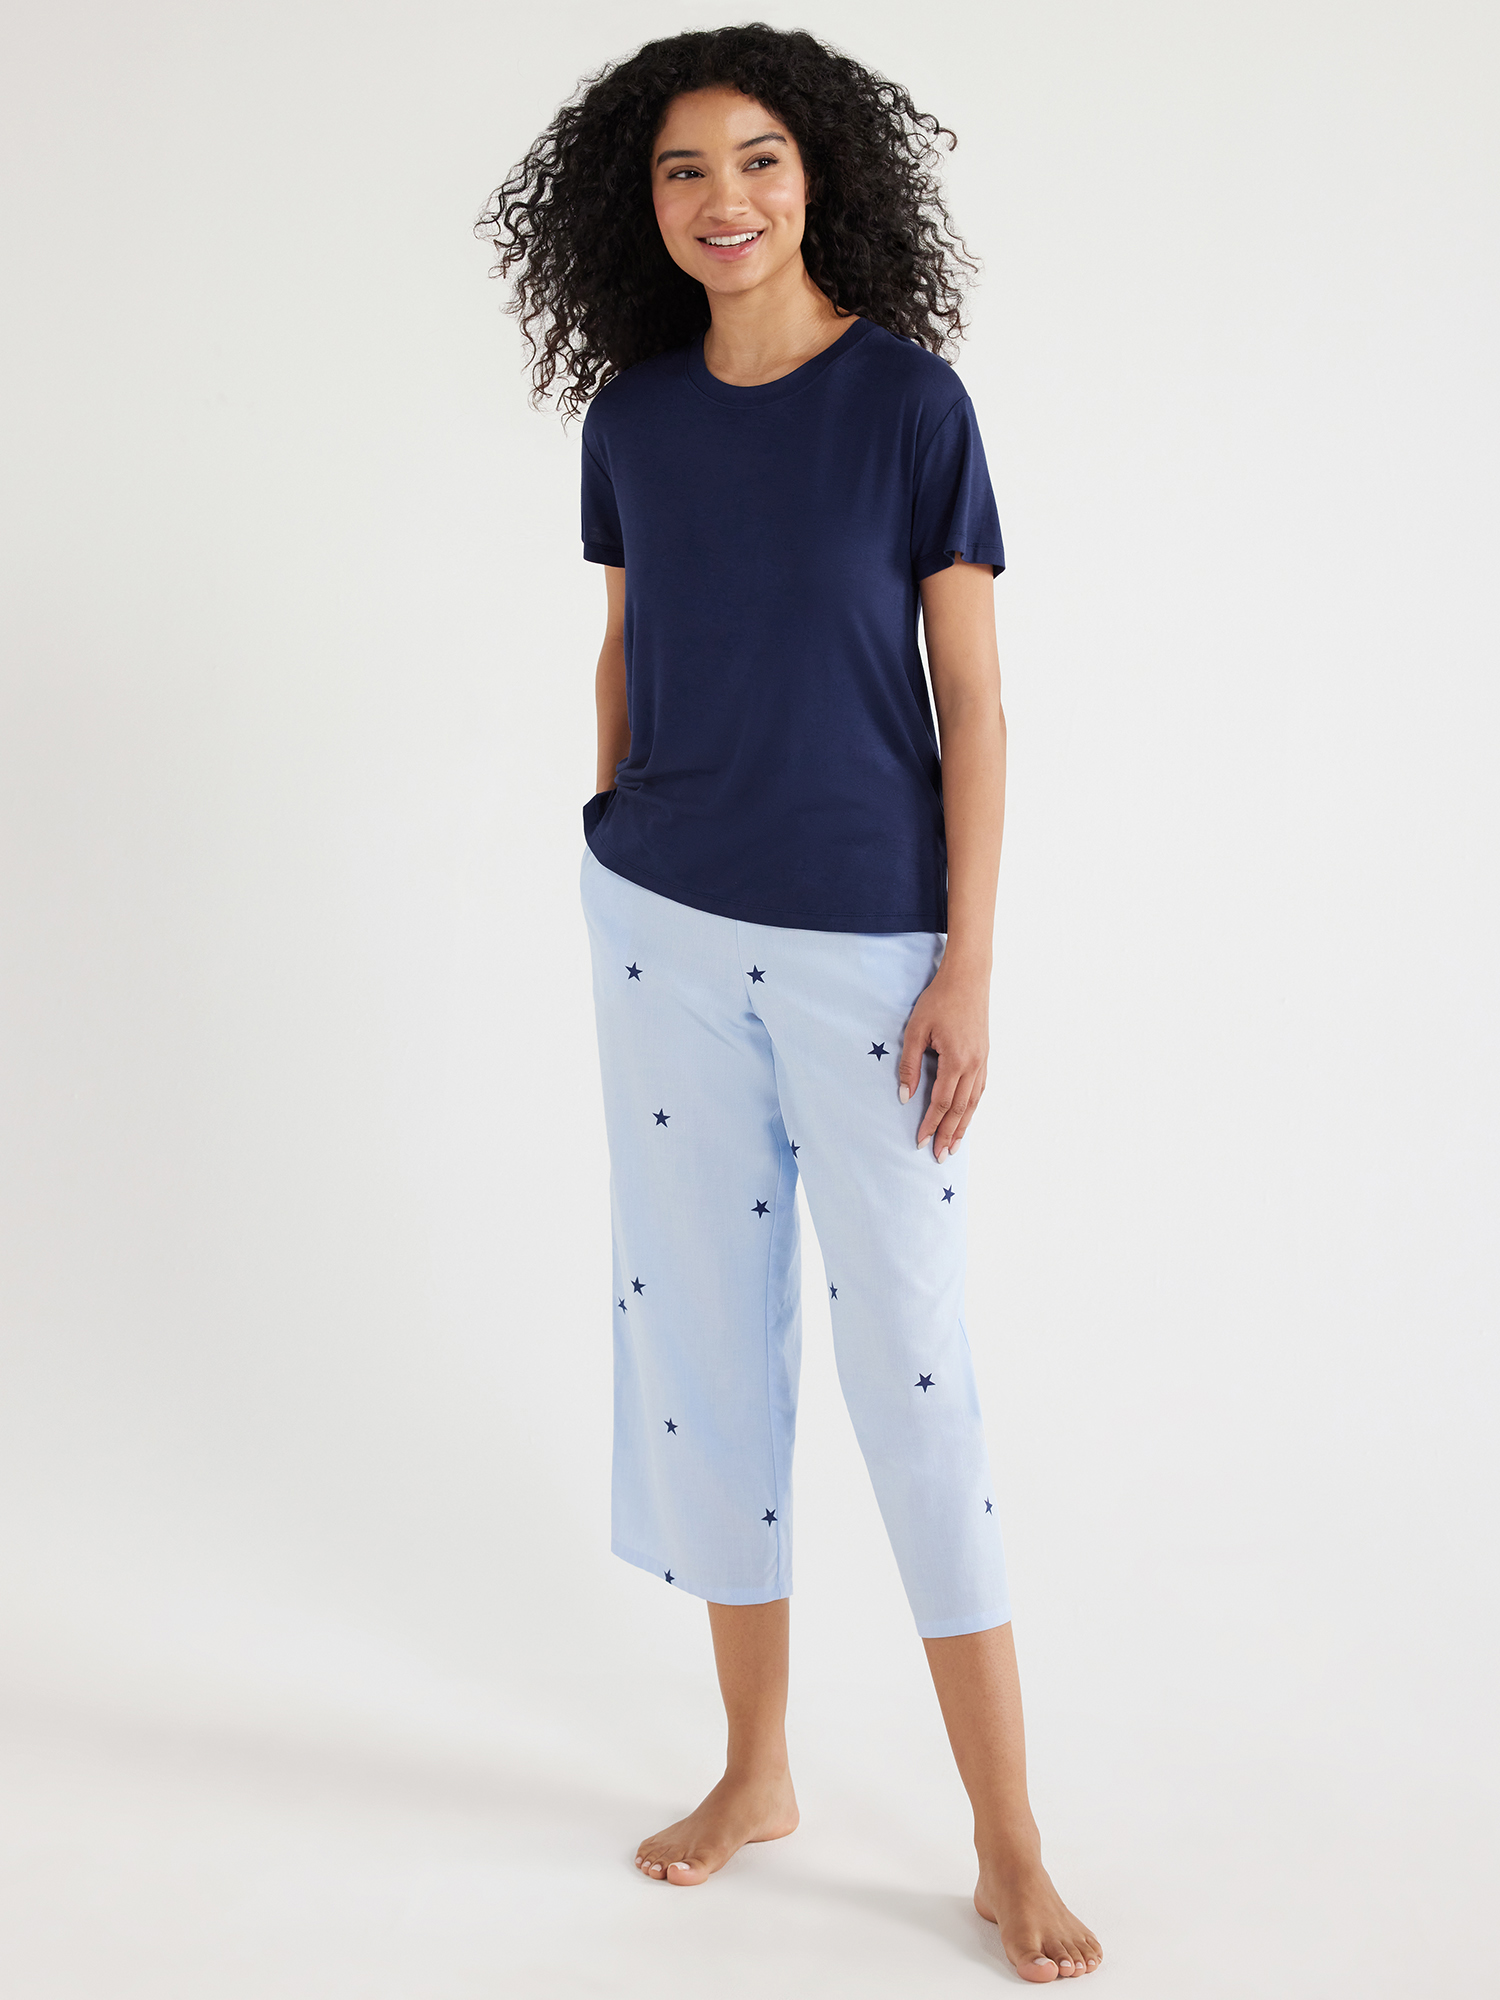 Joyspun Women's Short Sleeve Knit Sleep T-Shirt, Sizes S to 3X - image 3 of 7